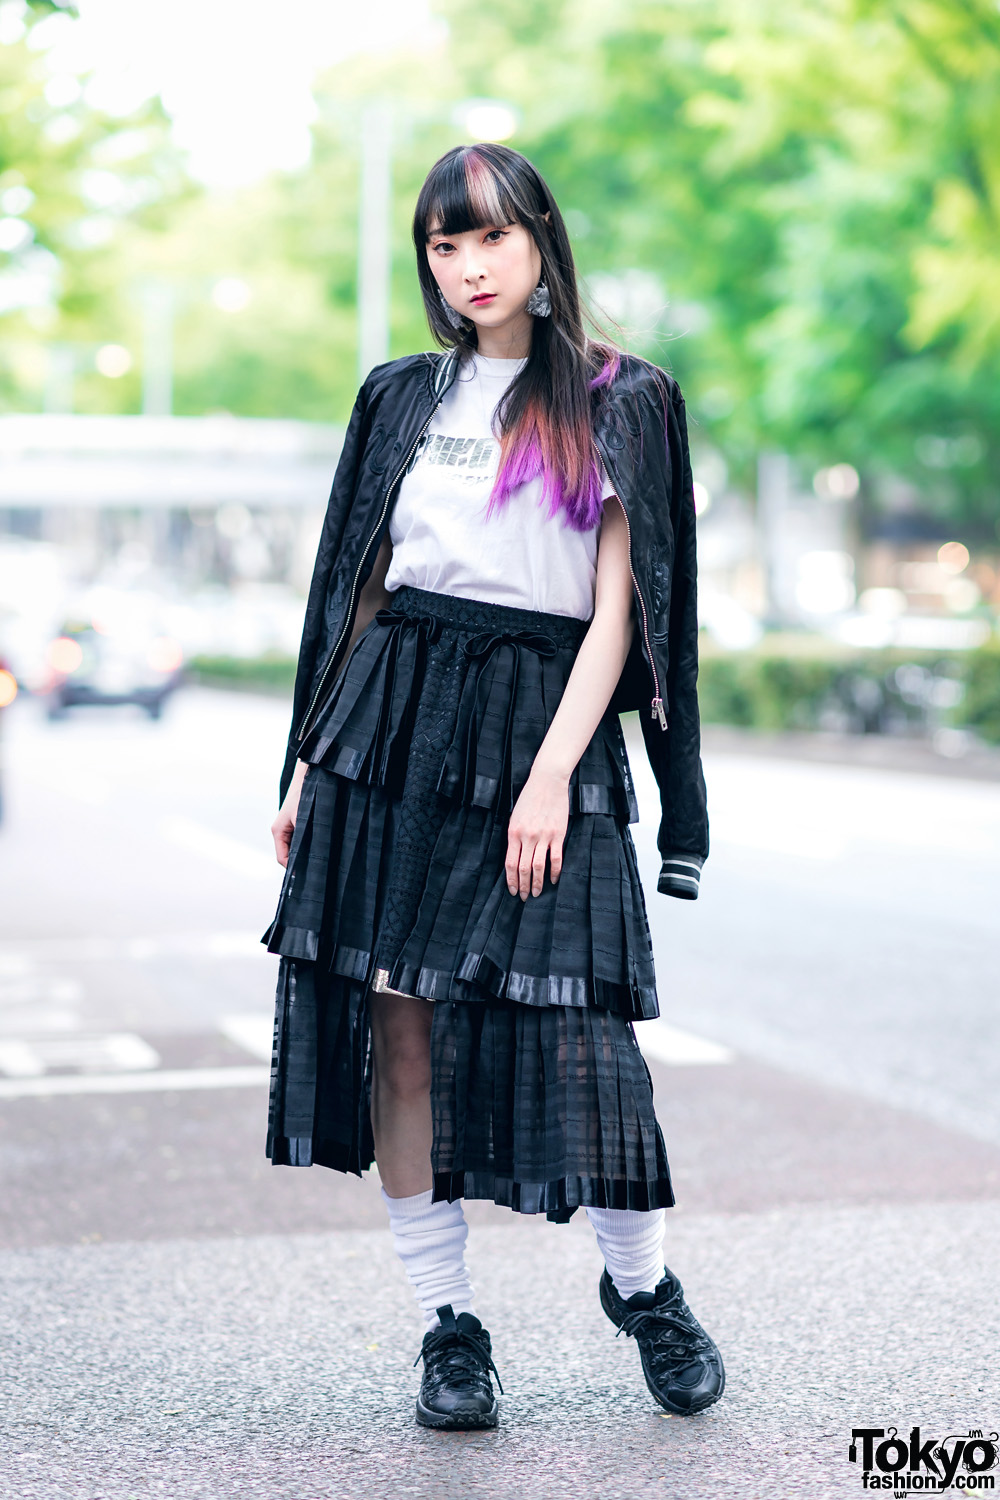 RinRin Doll in Harajuku Street Style w/ Satin Jacket, Michiko London Shirt, Rurumu Skirt, Pom Pom Earrings & Puma Sneakers